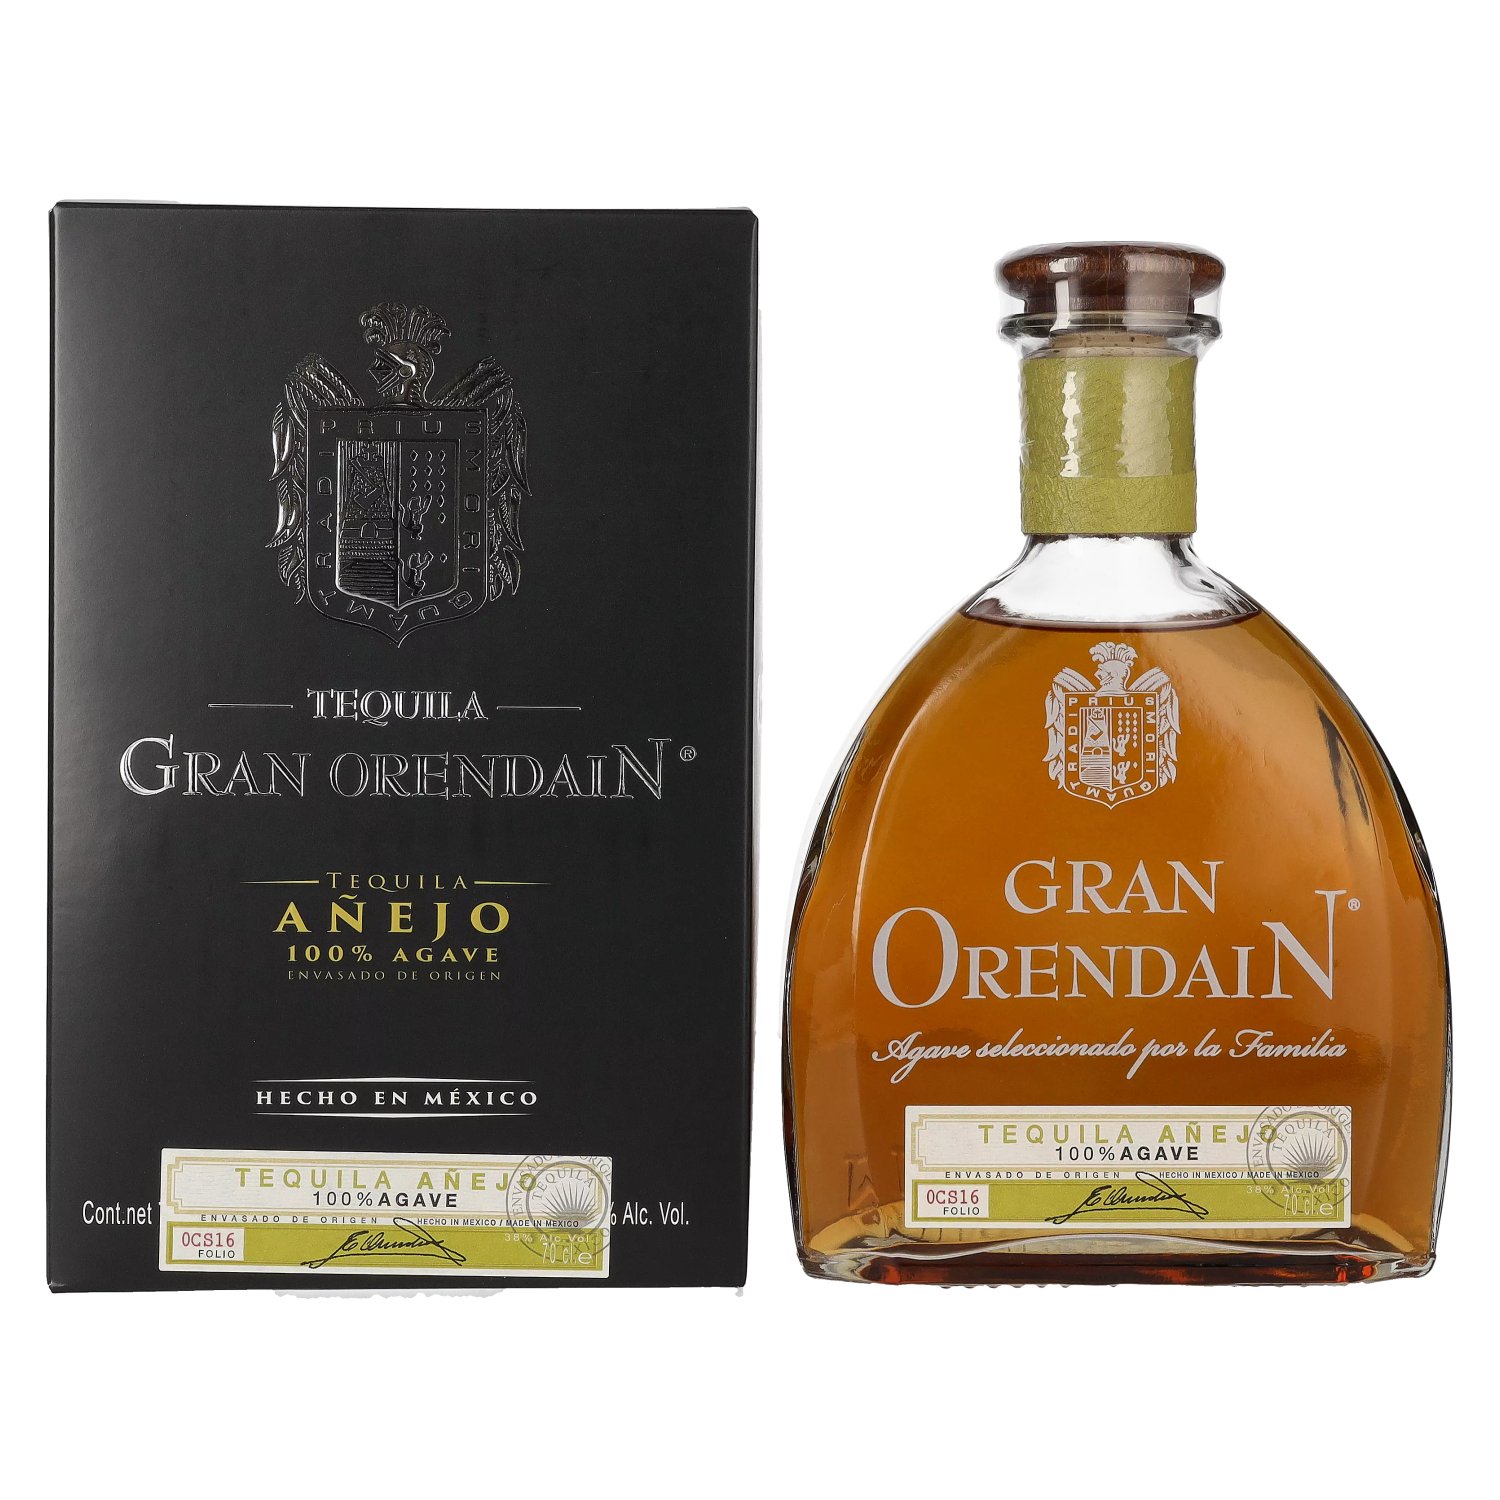 Gran Orendain Tequila AÑEJO 100% Agave 38% Vol. 0,7l in Giftbox